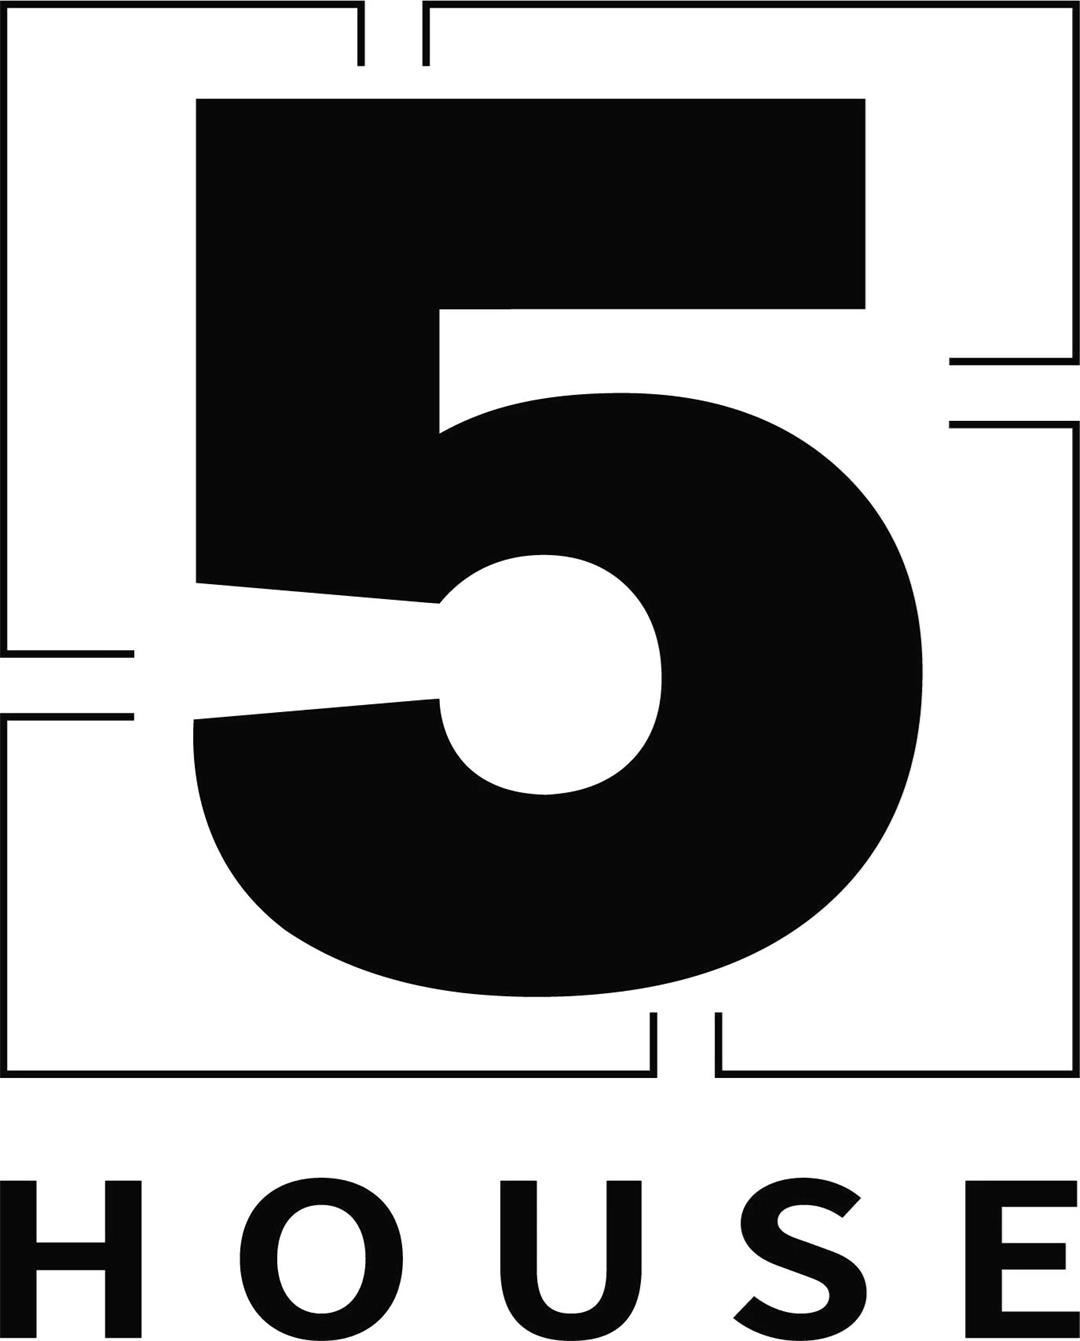 5house logo.jpeg